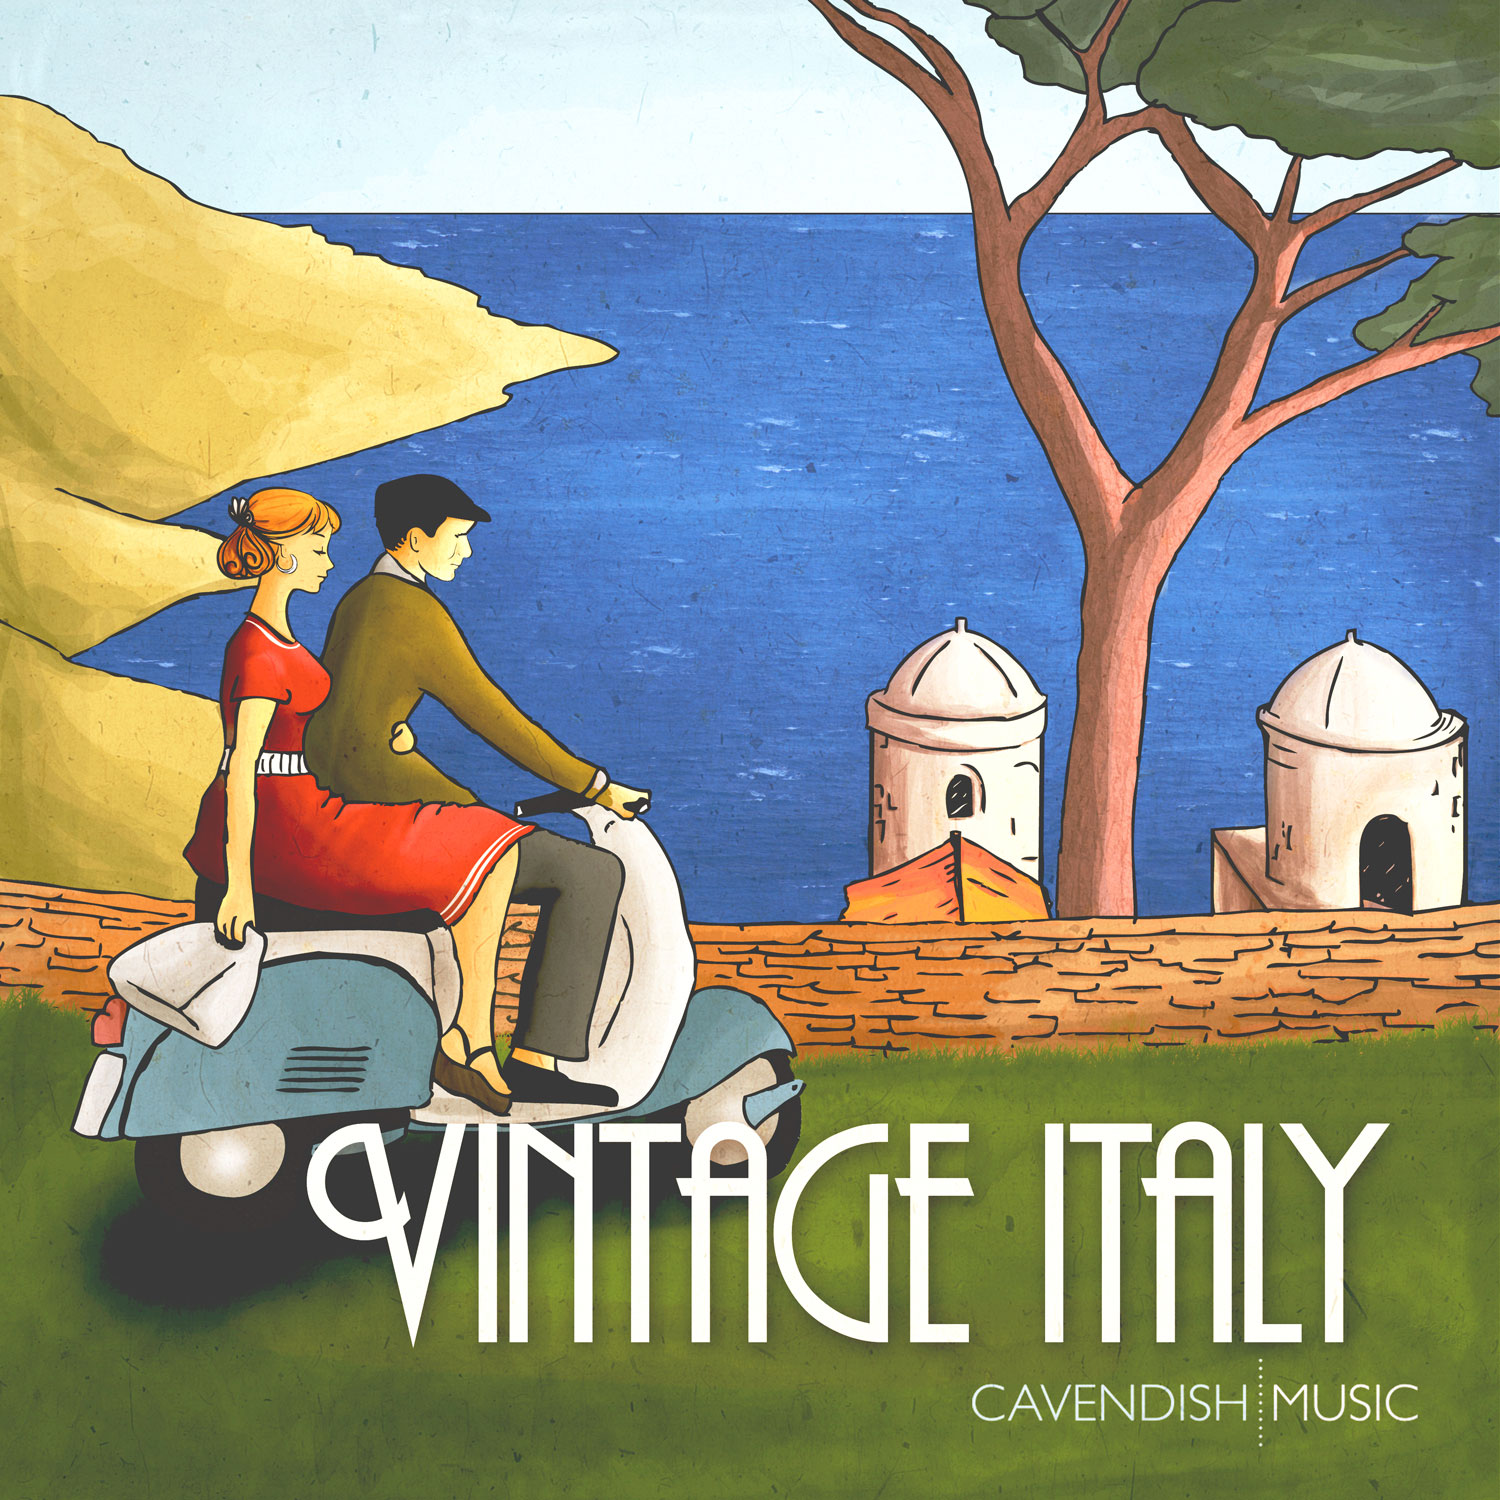 Vintage Italy